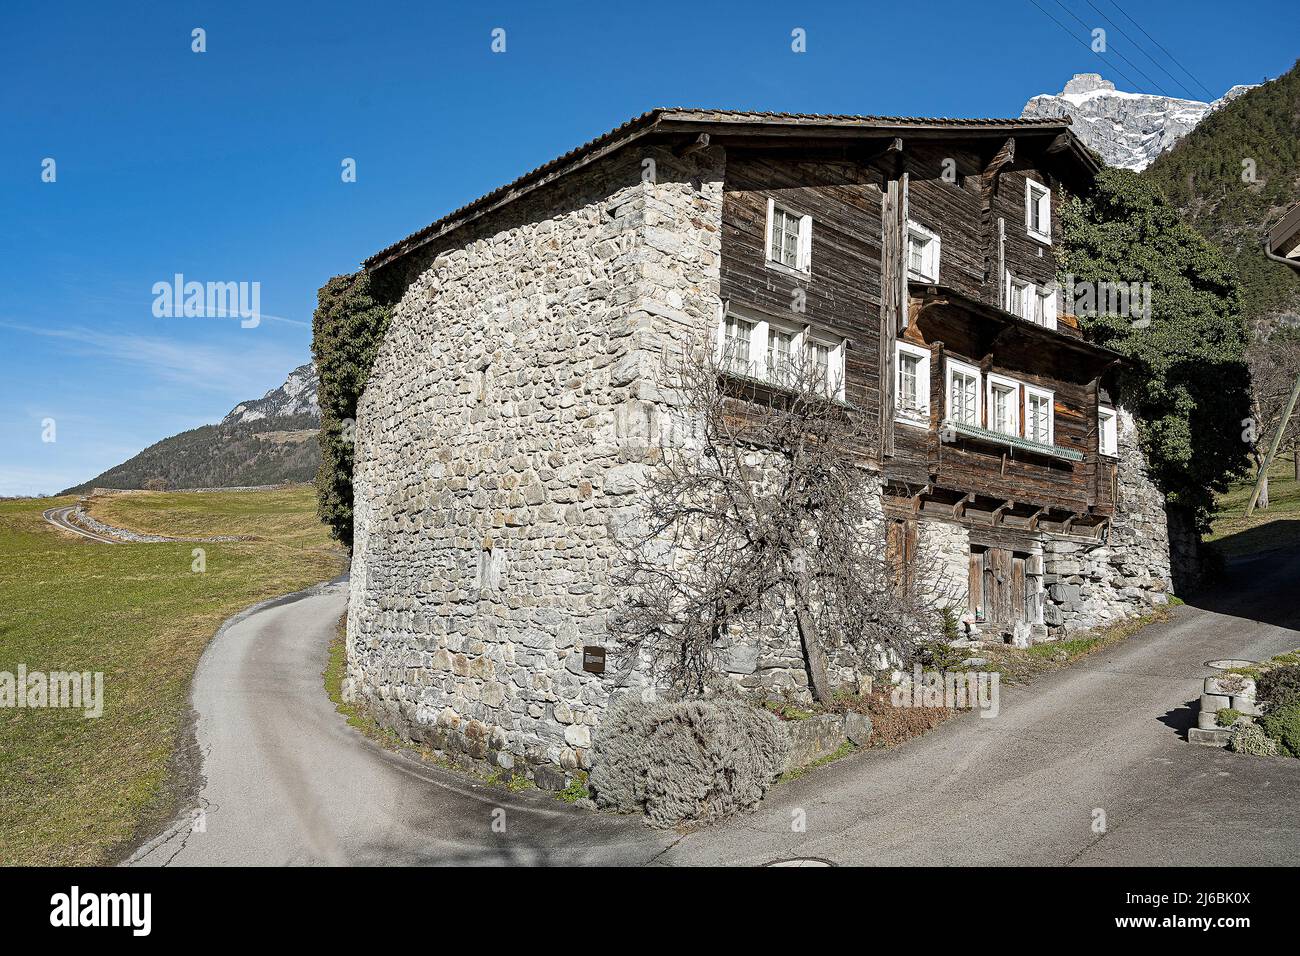 Historical stone house in Silenen, Canton of Uri, Switzerland Stock Photo